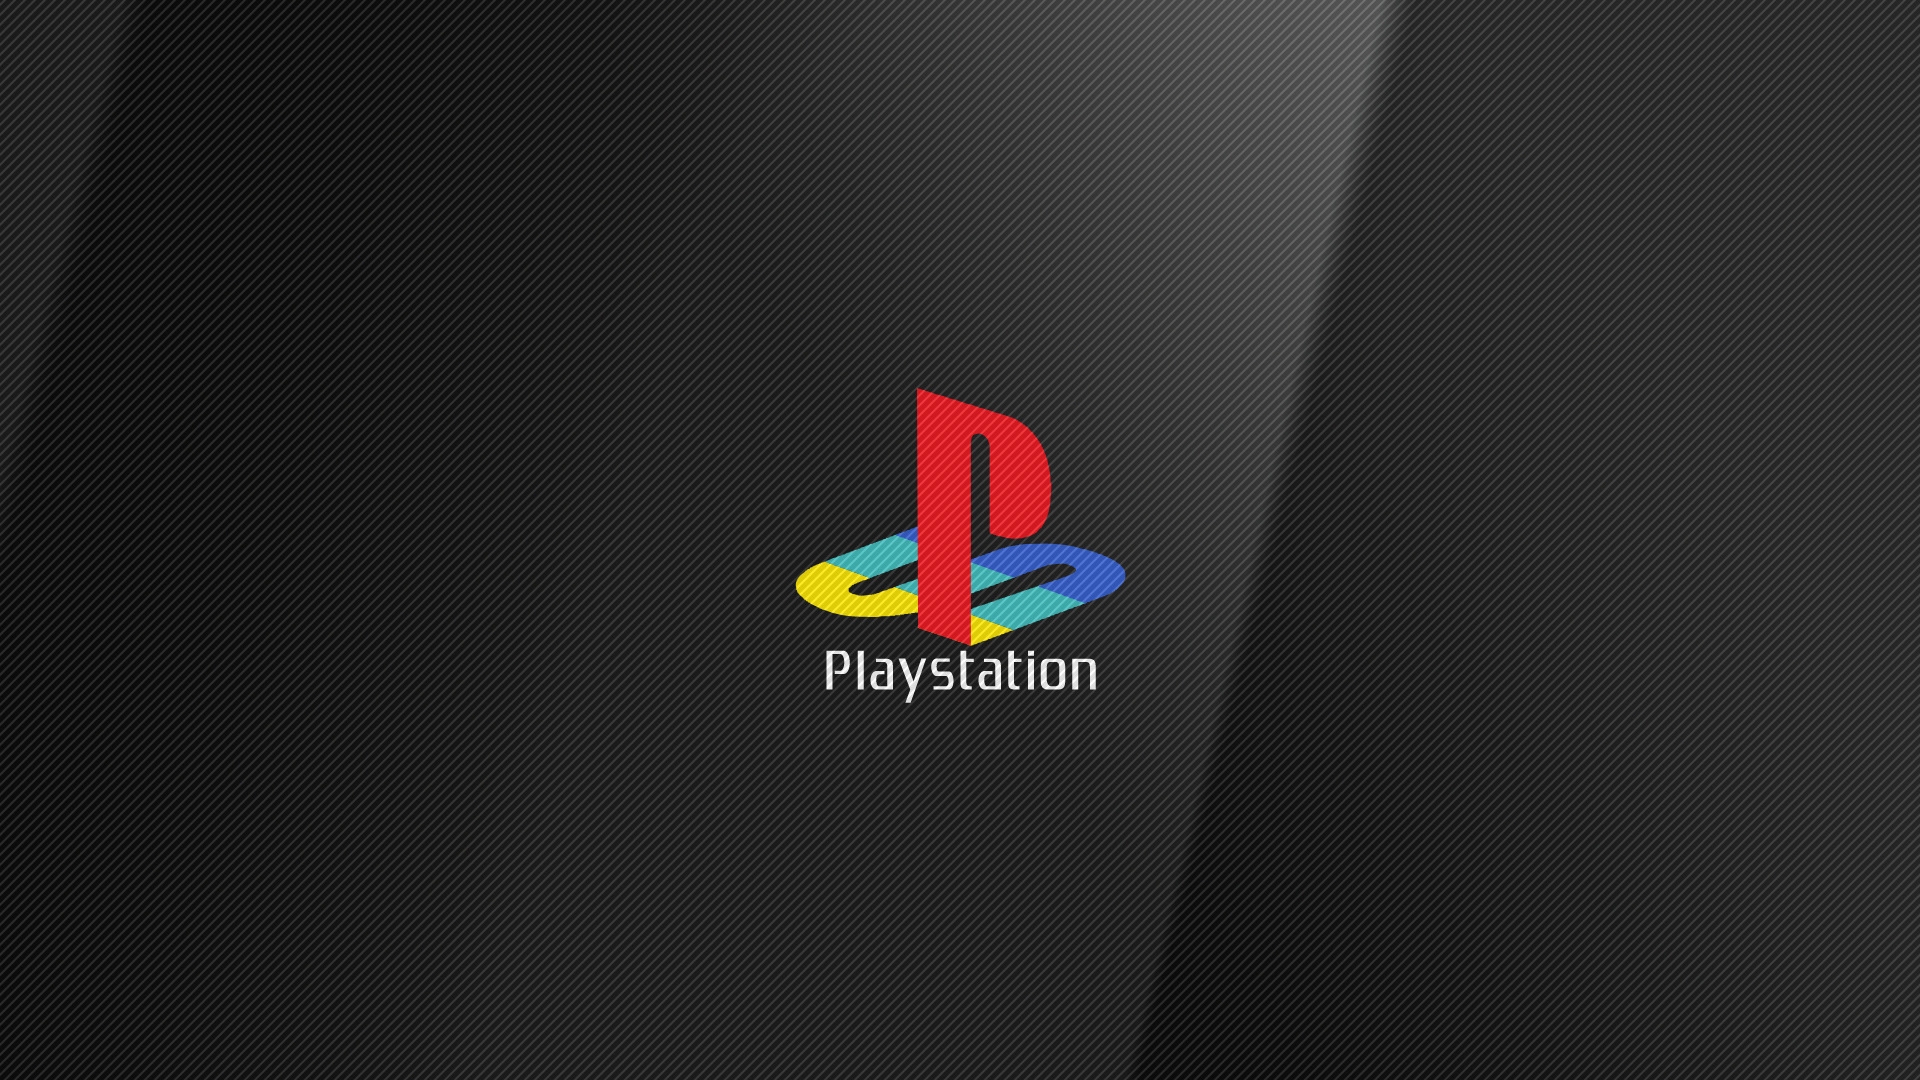 PlayStation Logo for 1920 x 1080 HDTV 1080p resolution